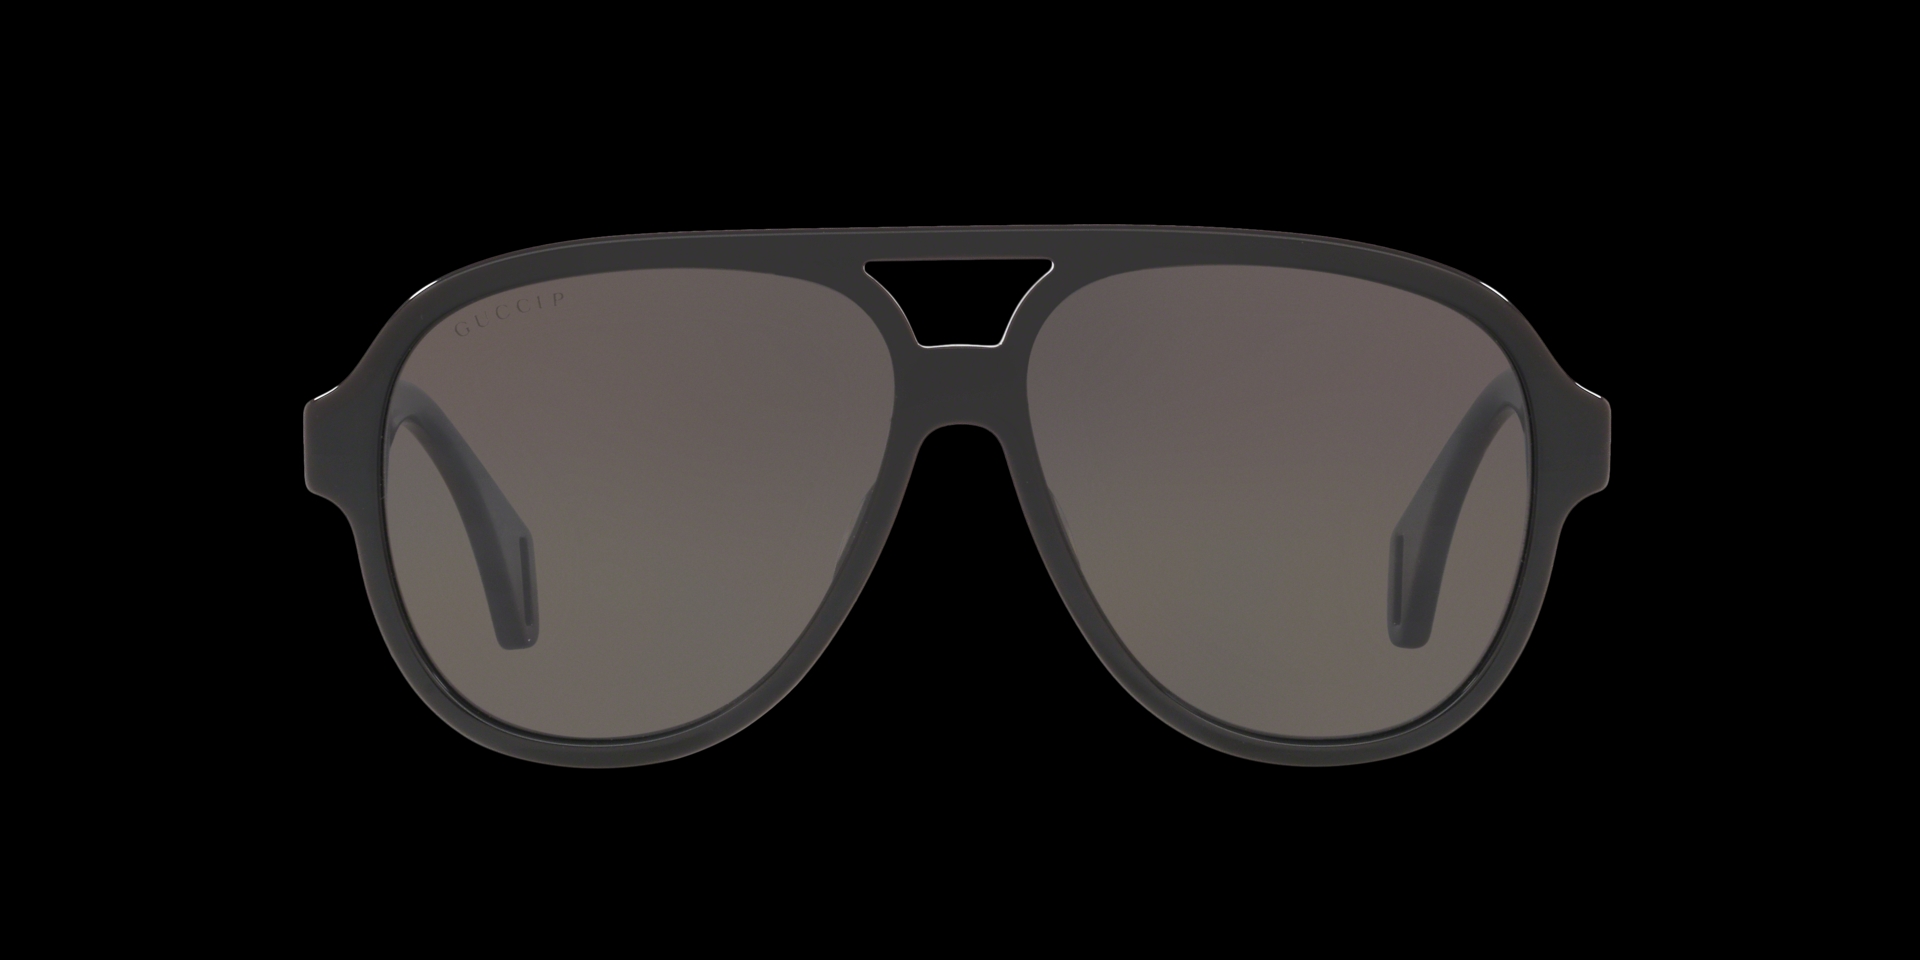 IMMACULATE CONDITION ORIGINAL Gucci sunglasses includes authenticity  certificate £150.00 - PicClick UK